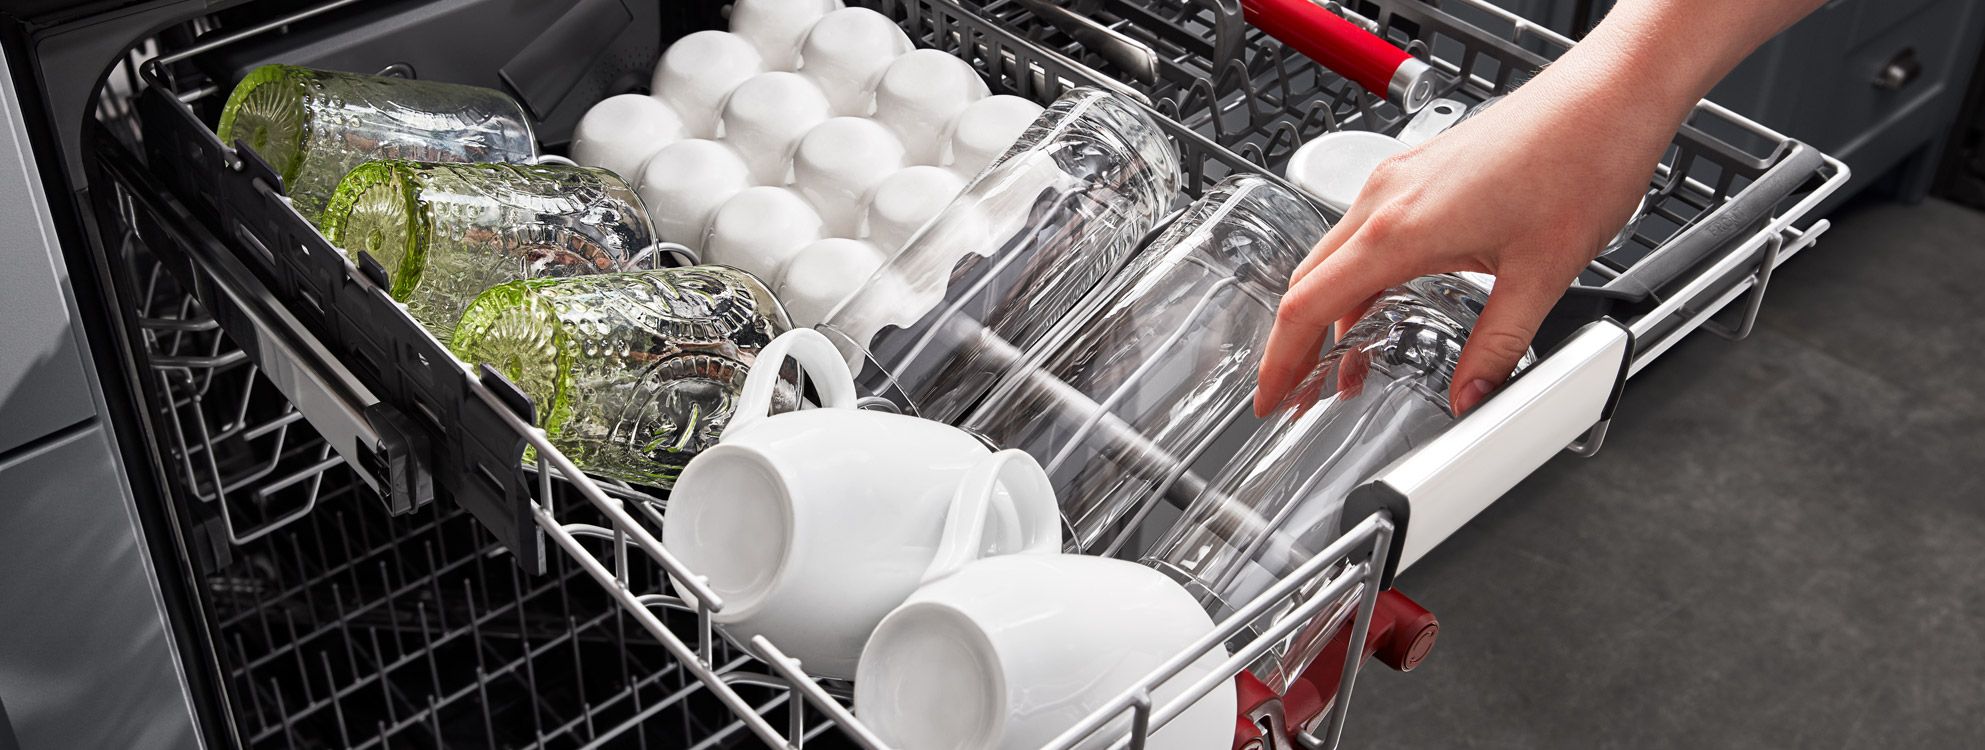 Kitchenaid dishwasher freeflex third rack